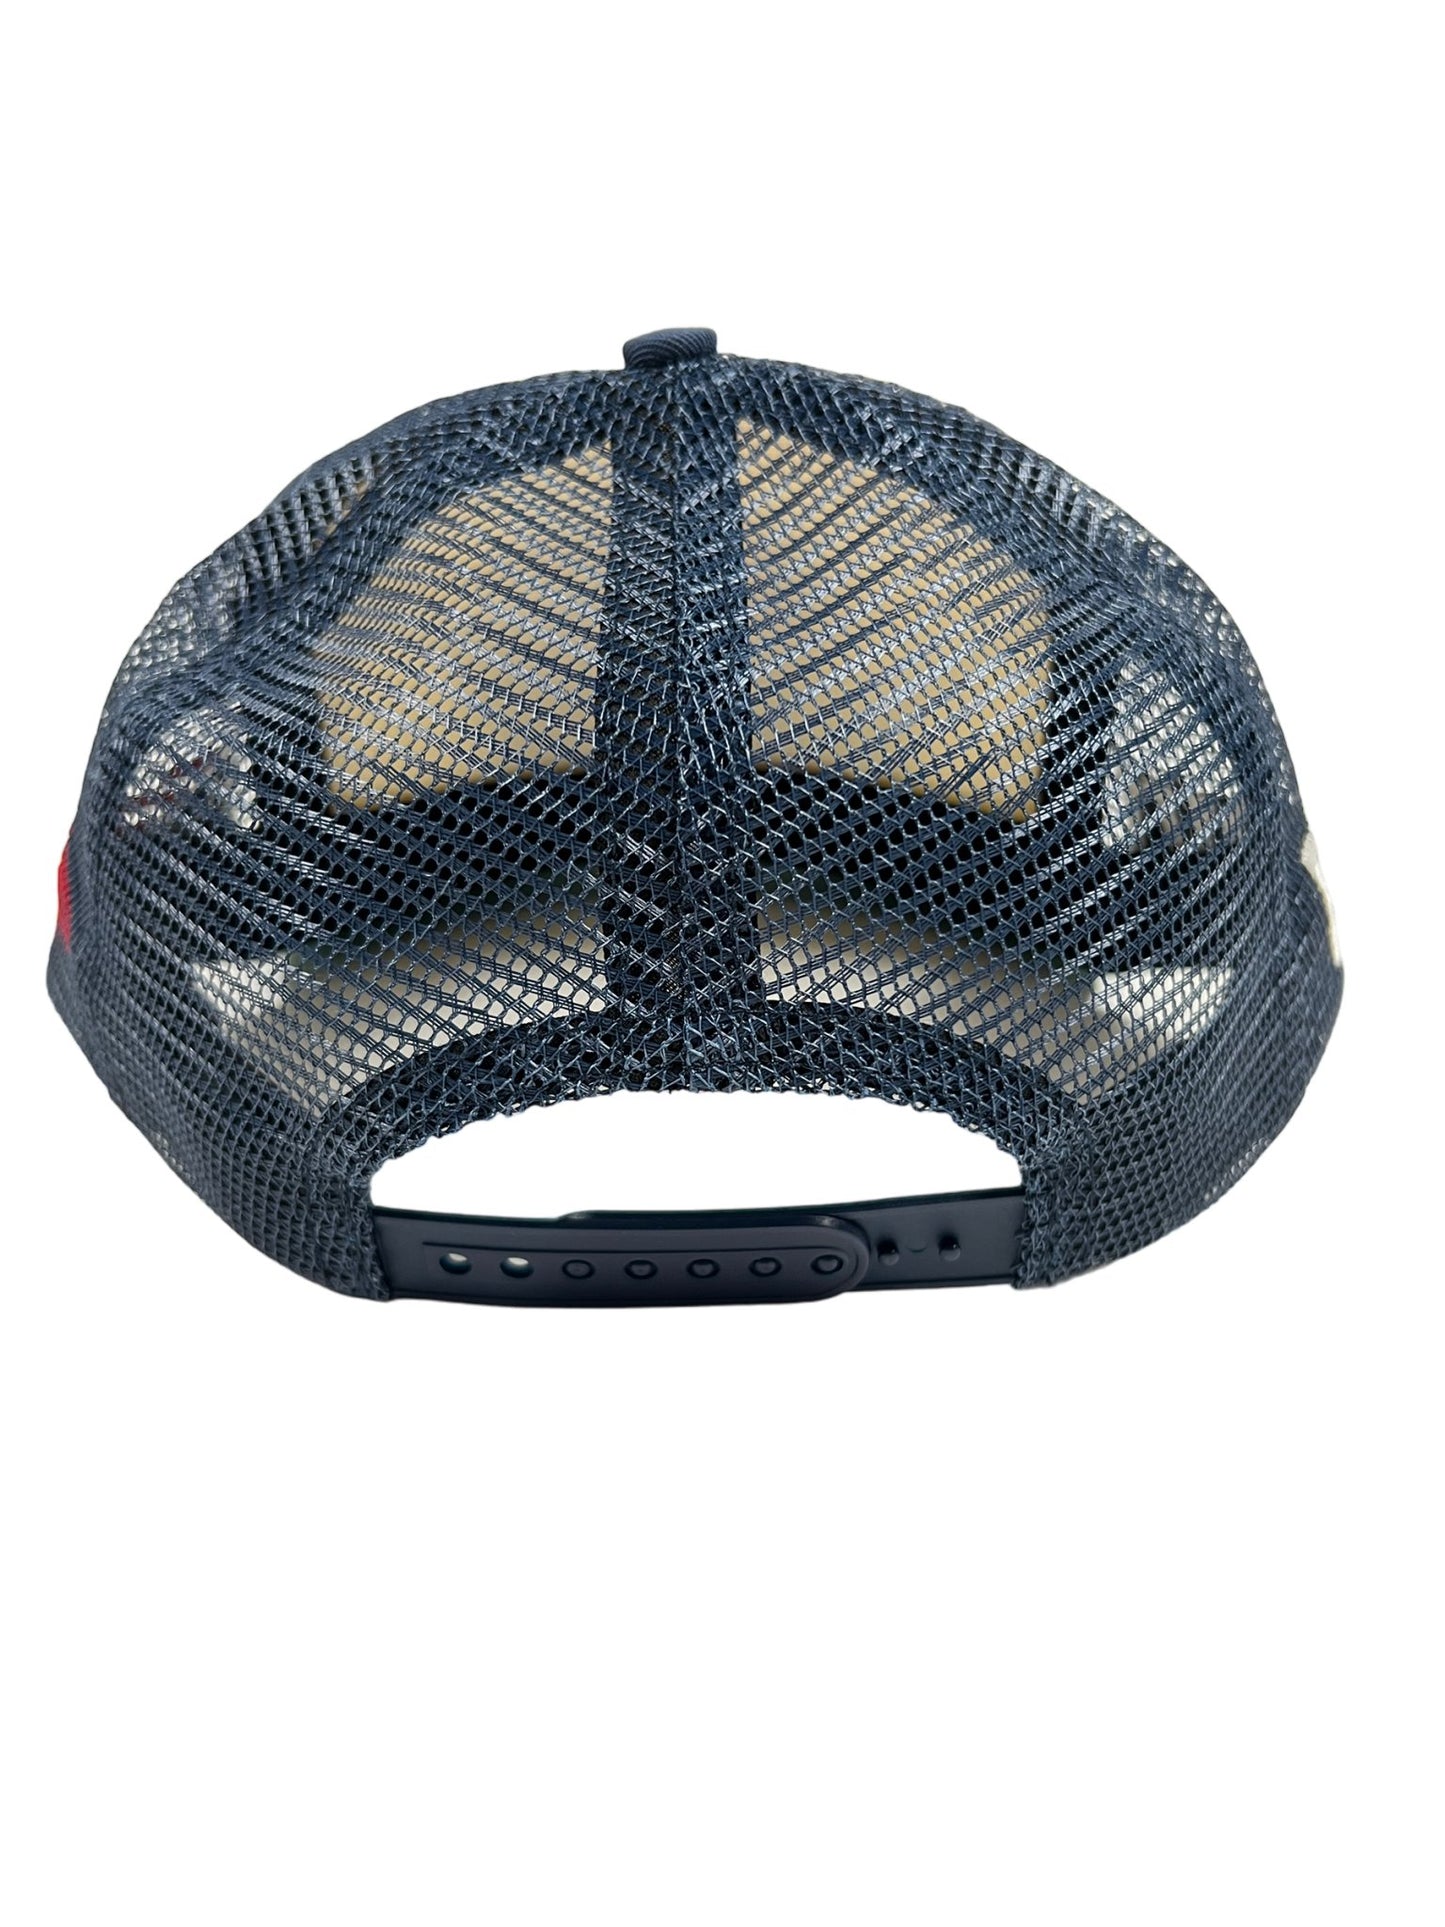 The back of a navy RHUDE SAINT CROIX mesh trucker hat.